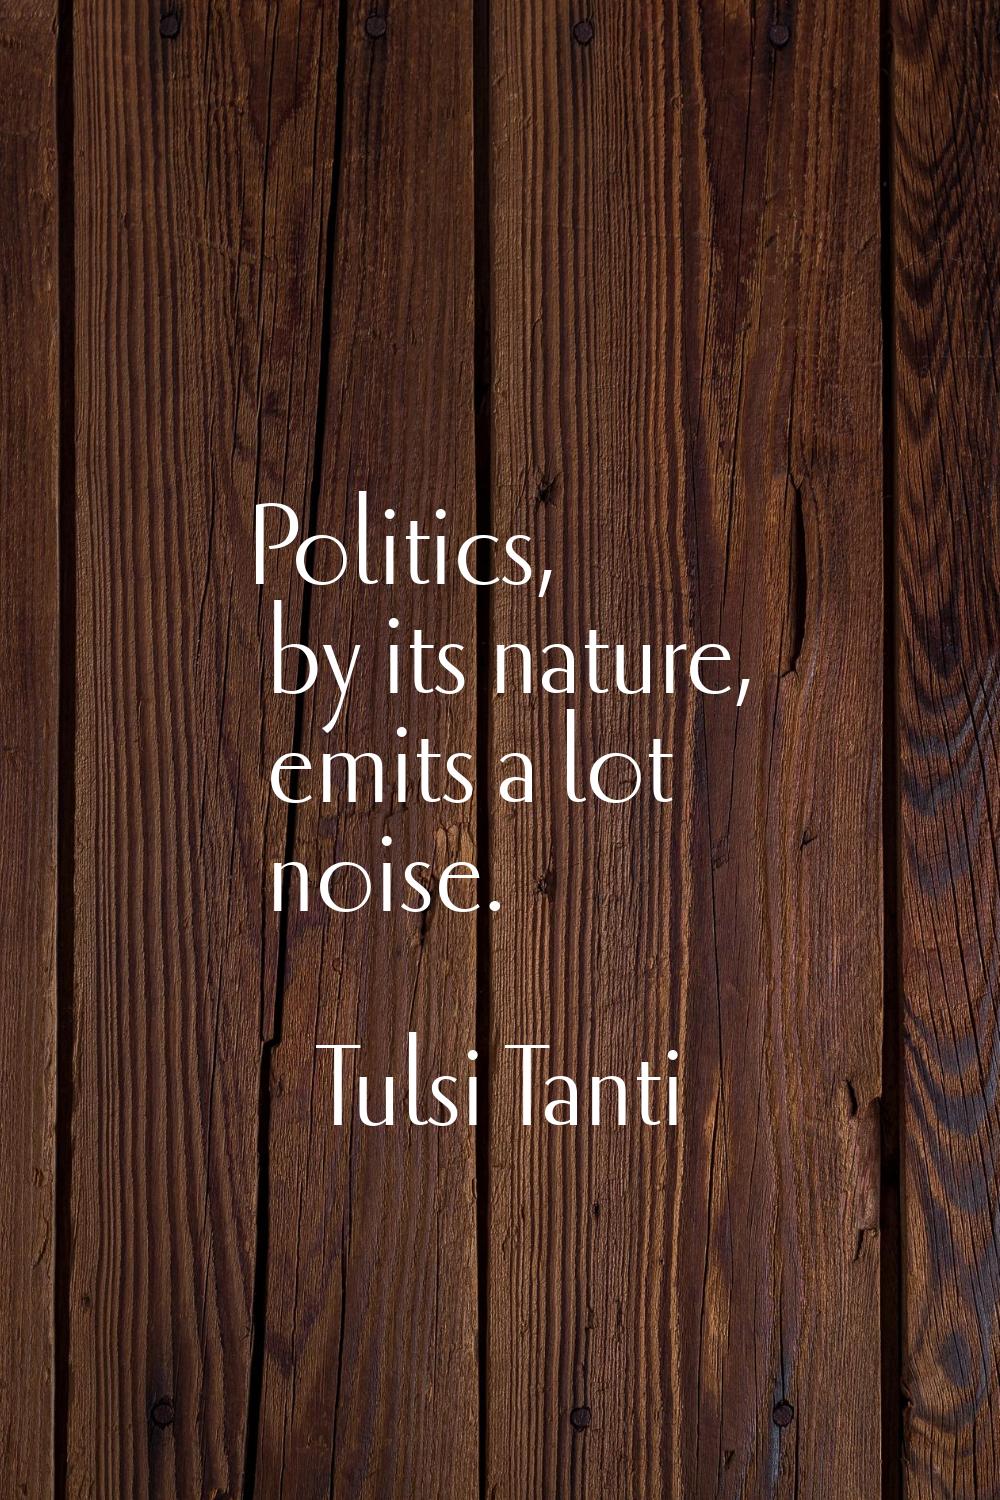 Politics, by its nature, emits a lot noise.